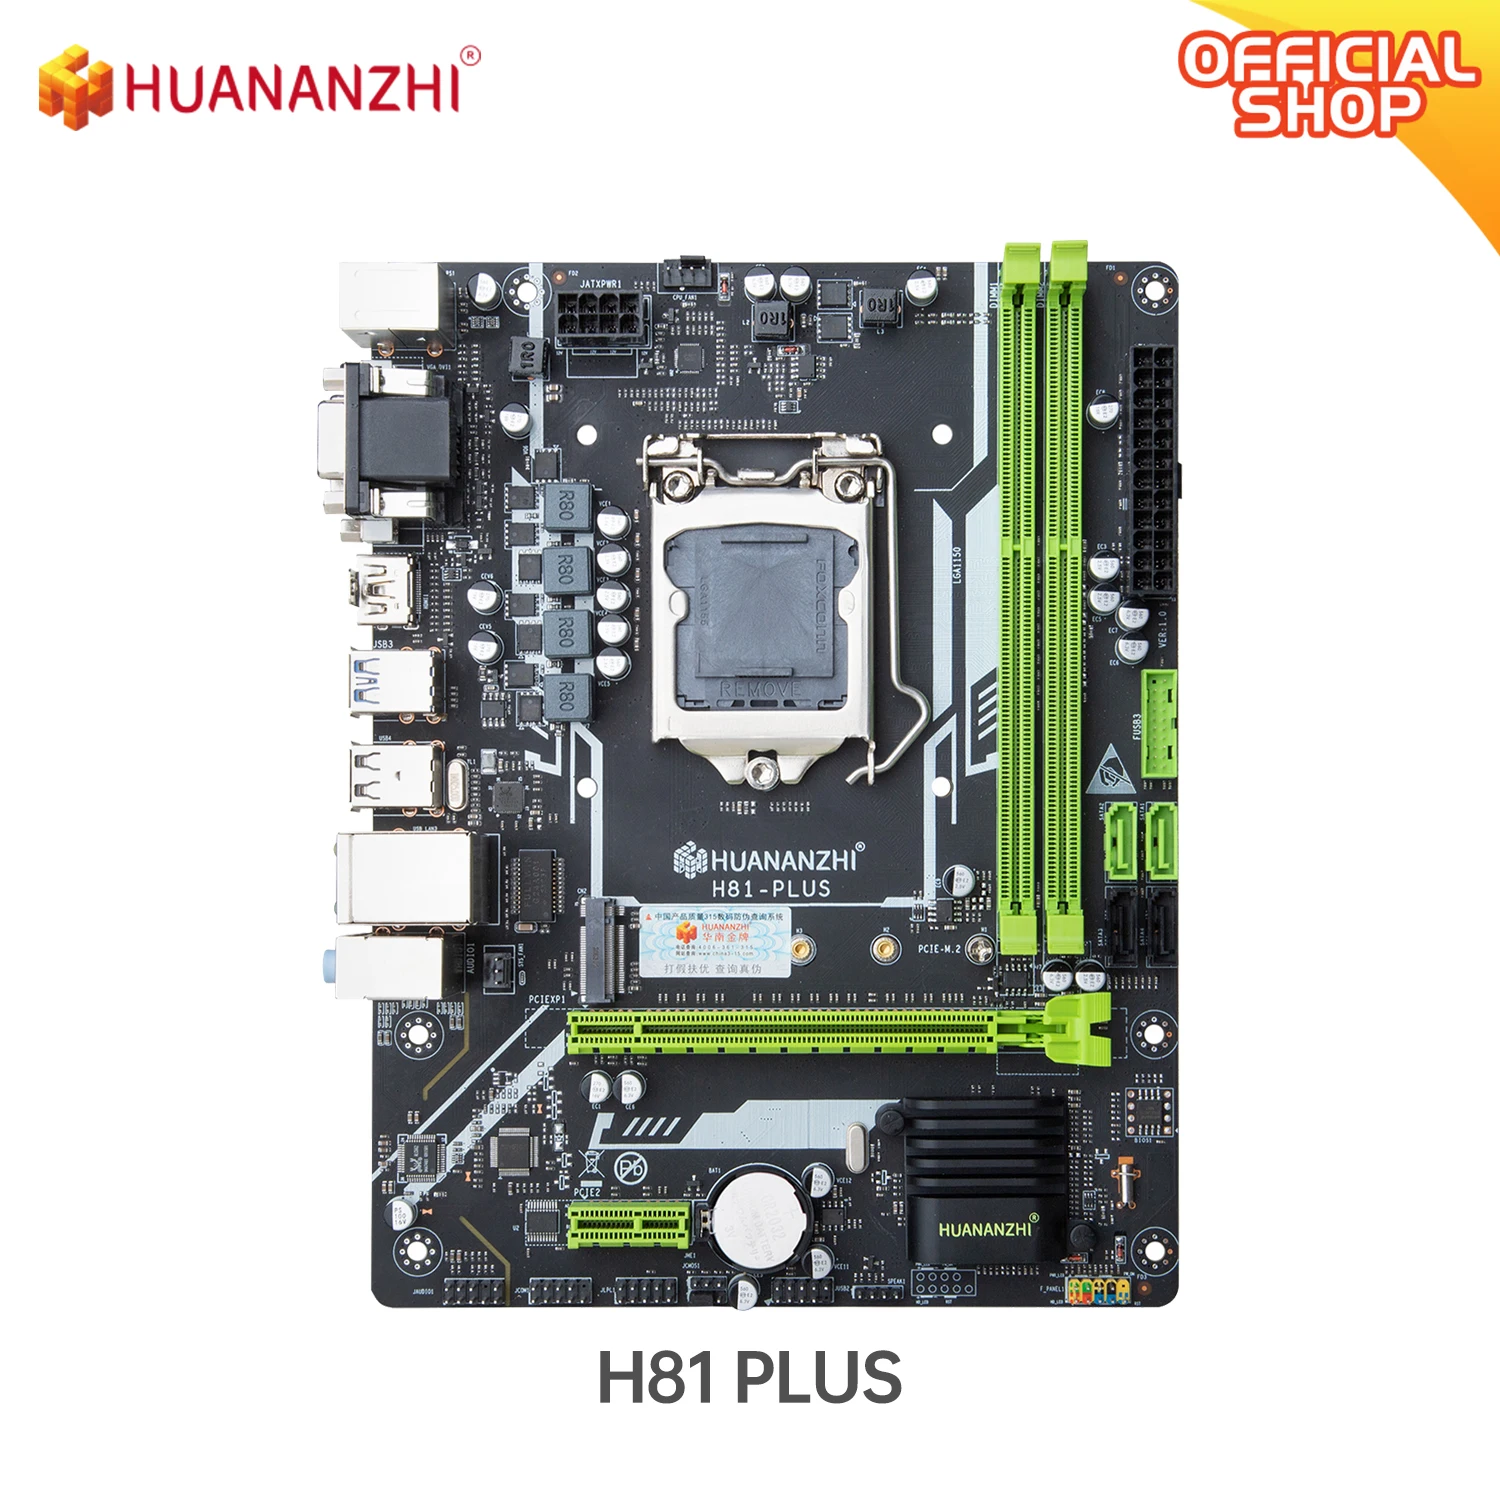 

HUANANZHI H81 PLUS Motherboard LGA 1150 M.2 NVME Slot Support i3 i5 i7/Xeon E3 V3 Processor DDR3 RAM H81 PLUS Mainboard